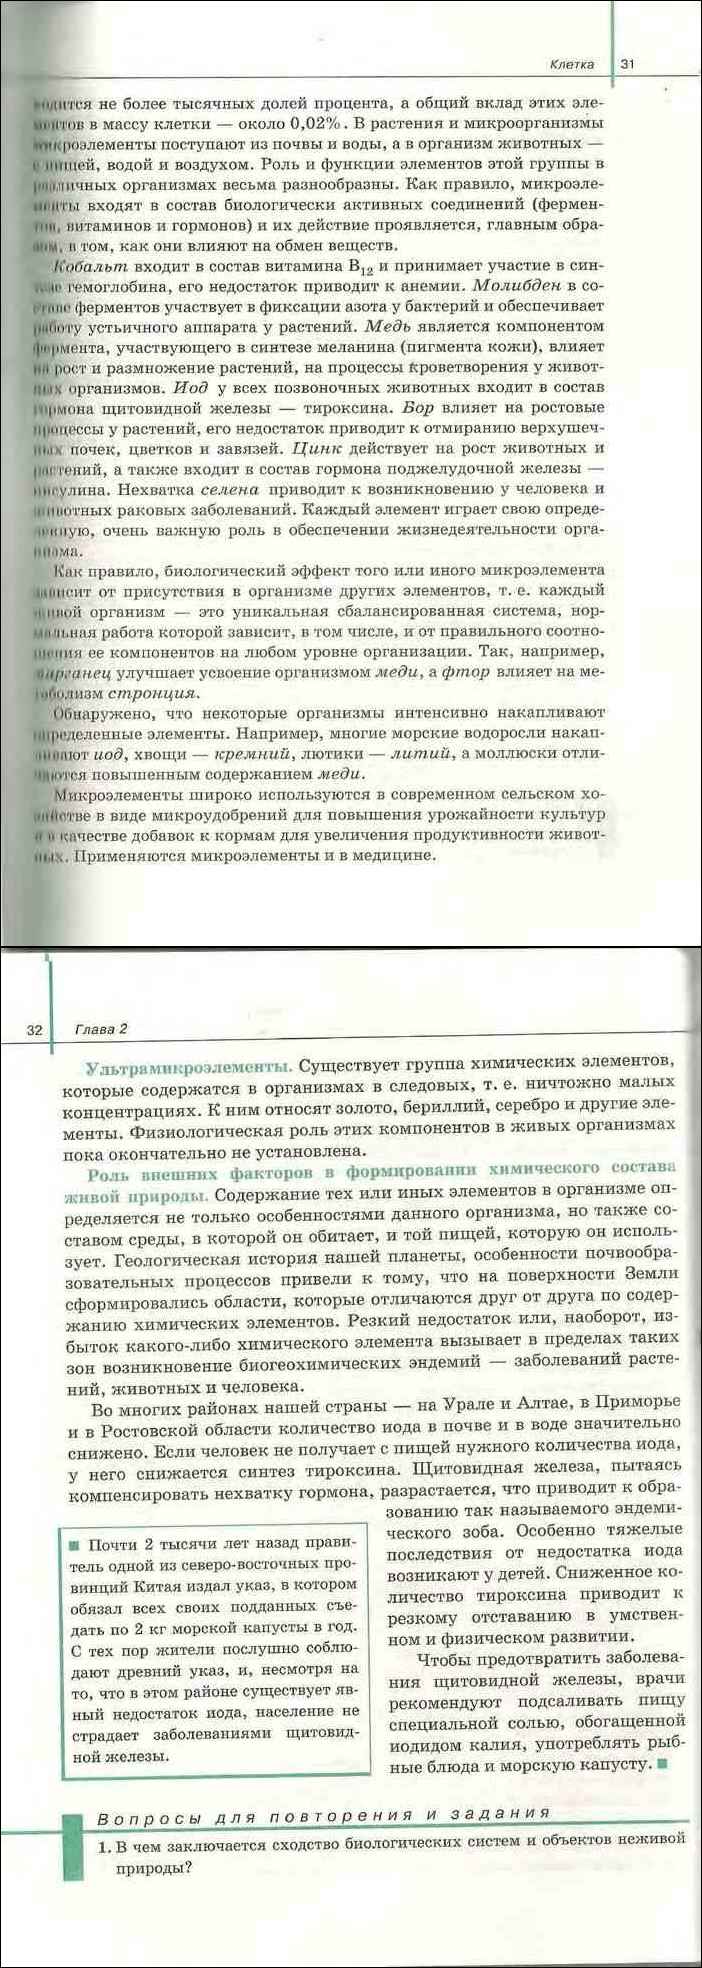 Сивоглазов агафонова захарова биология 11 класс